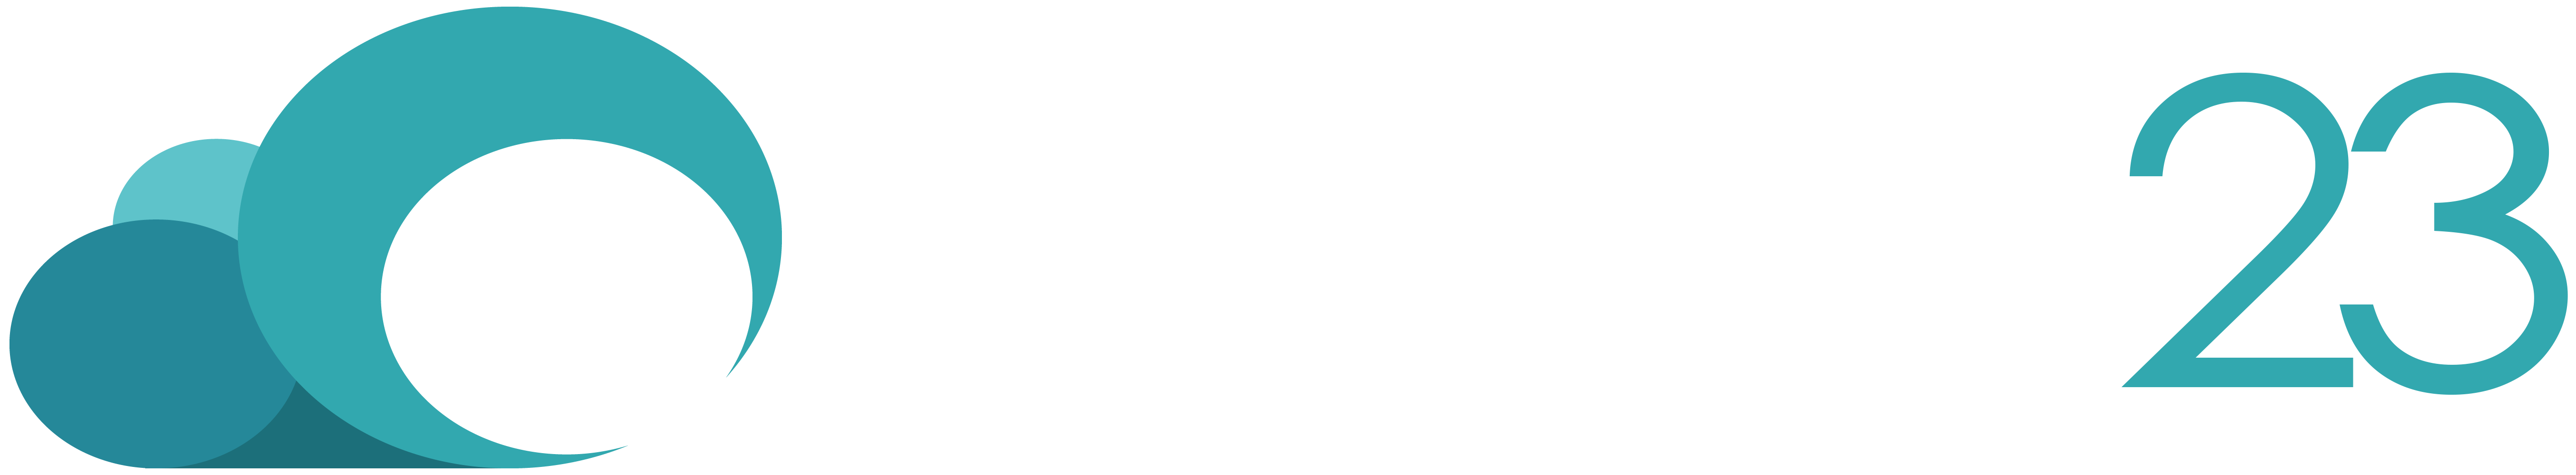 Cloud 23 Technologies